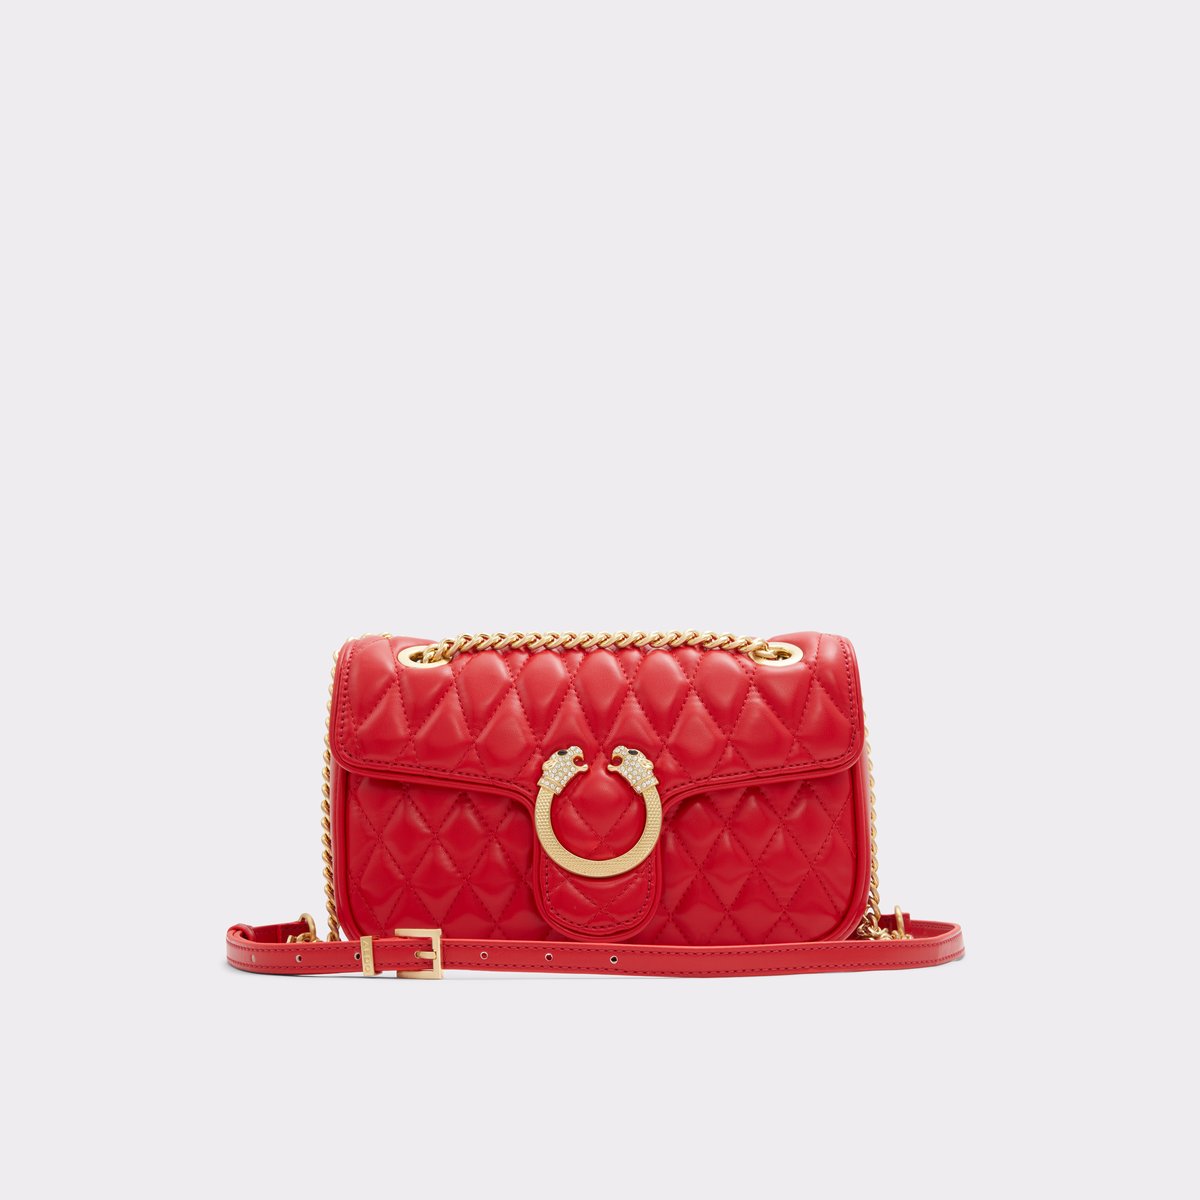 Women's Even&Odd Handbag, size Maxi (Red)